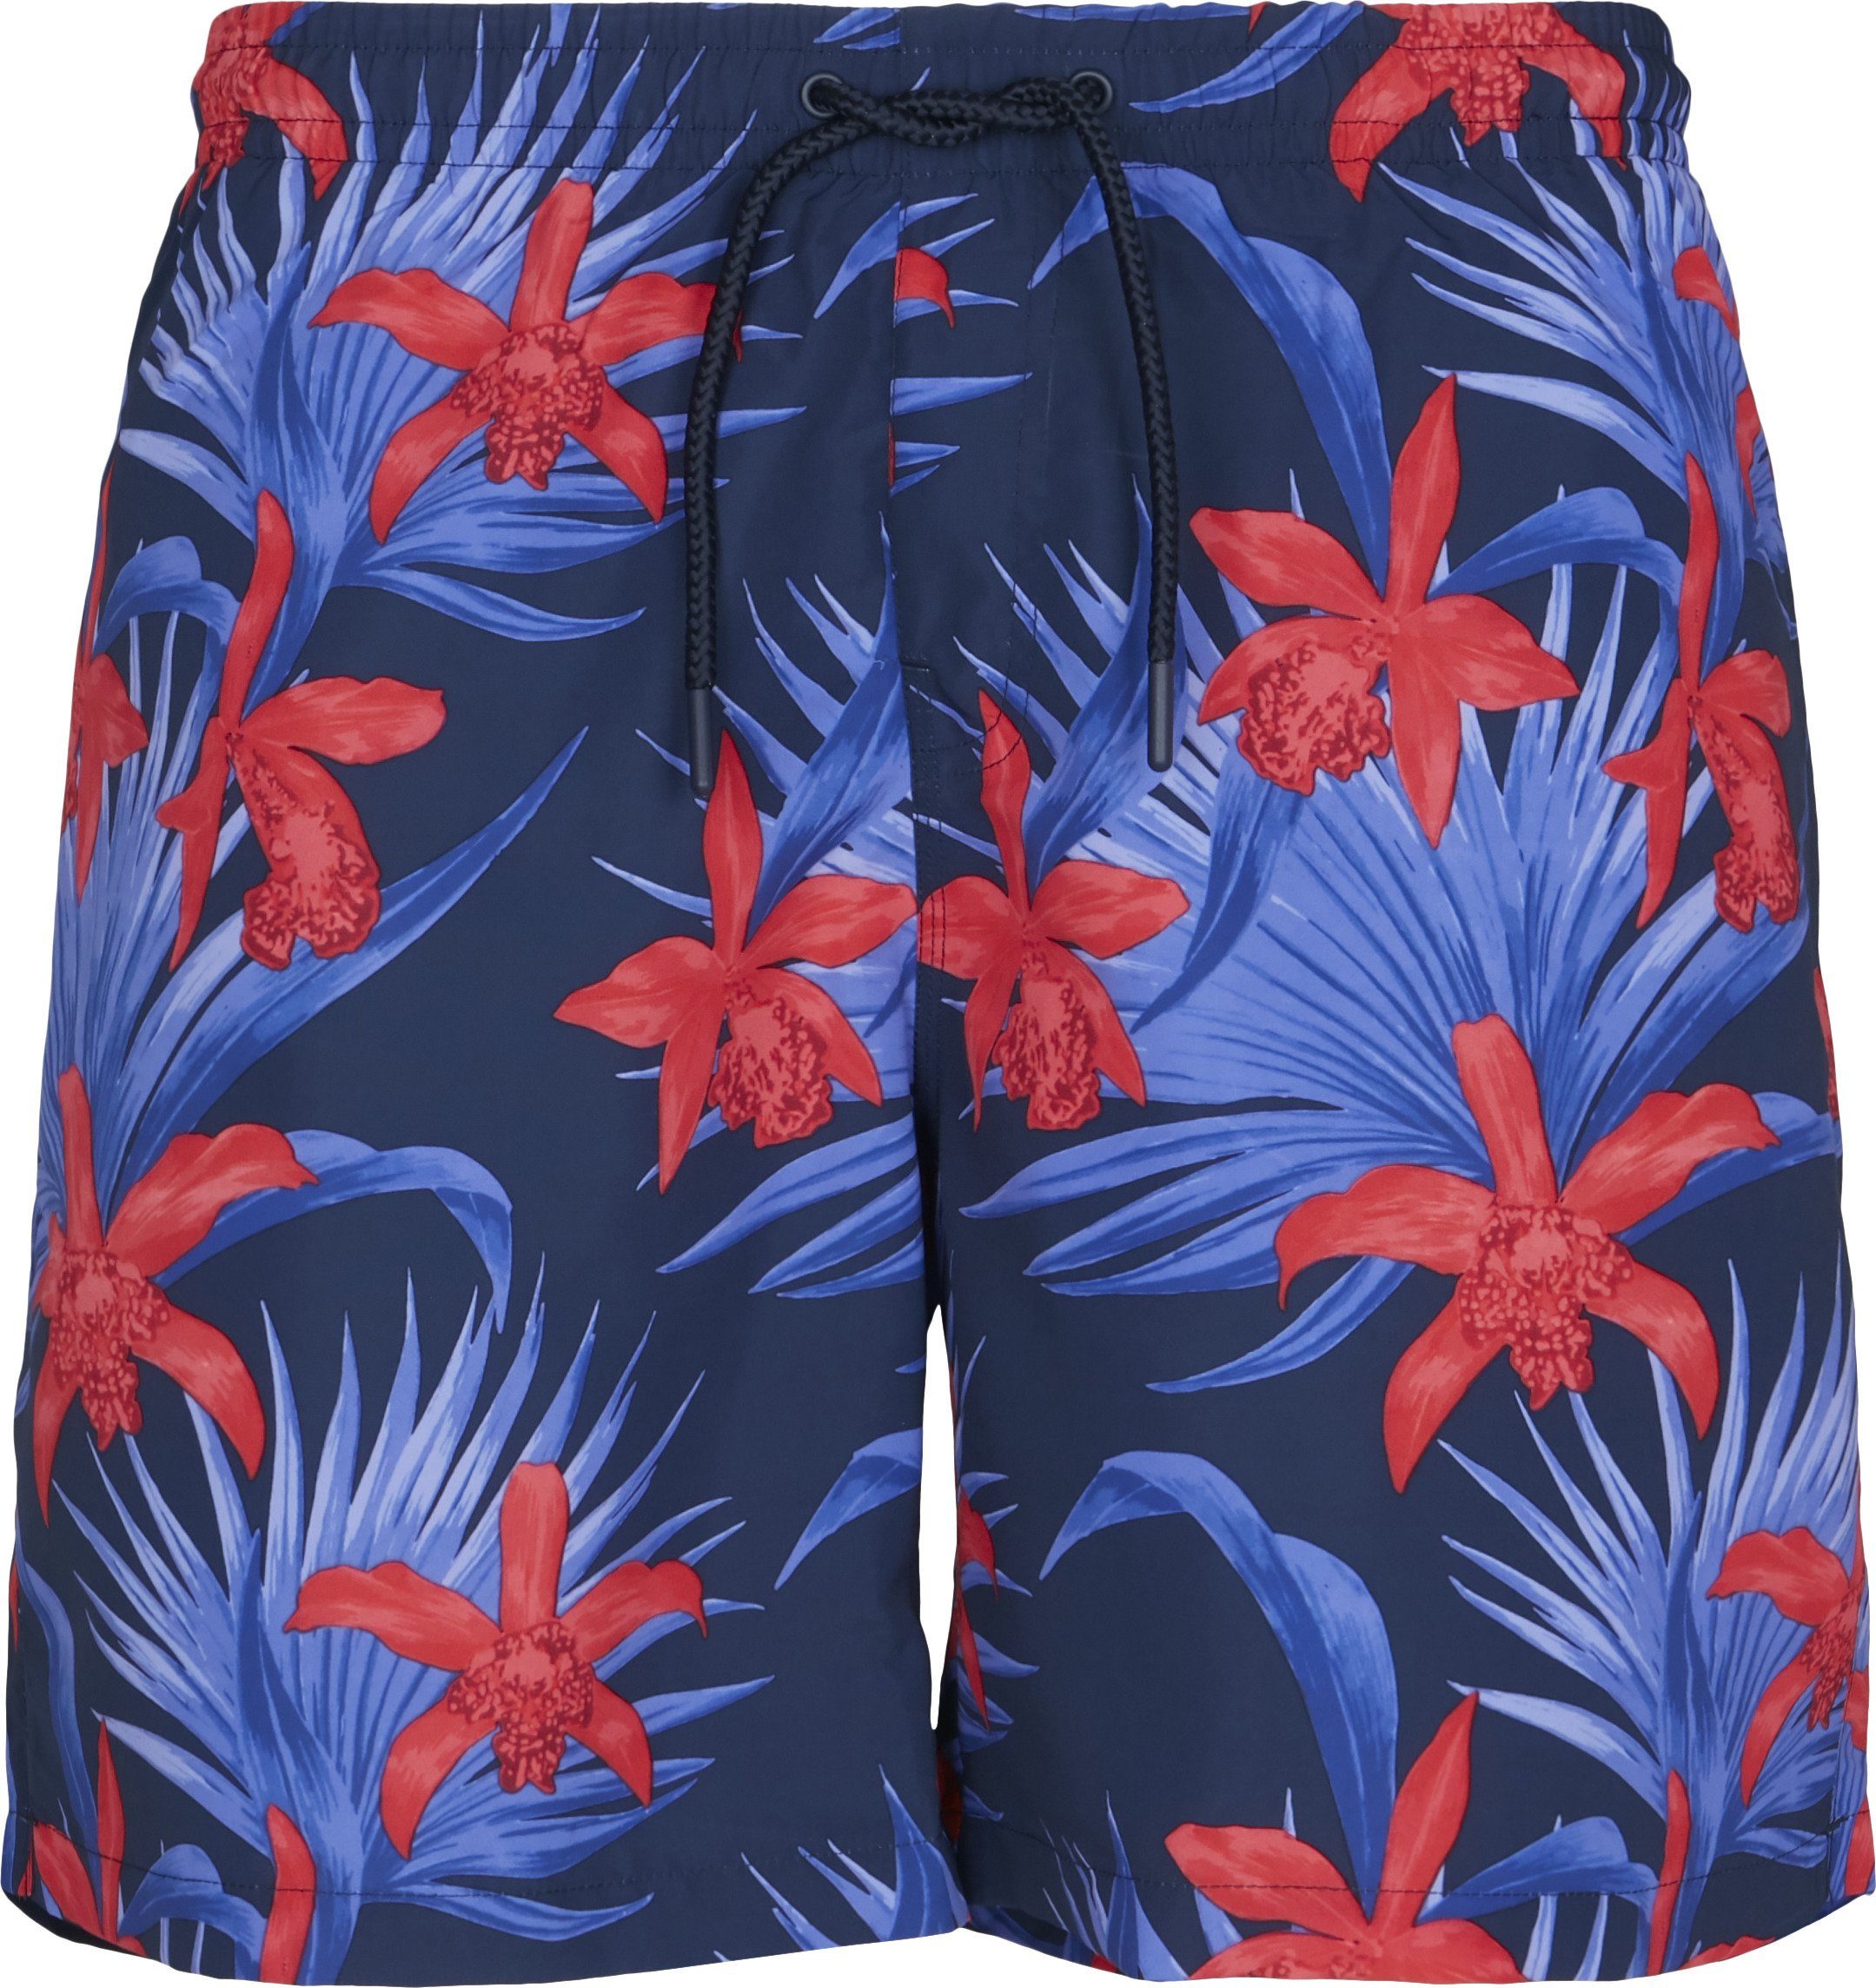 URBAN CLASSICS Badeshorts Herren Pattern Swim Shorts blue/red